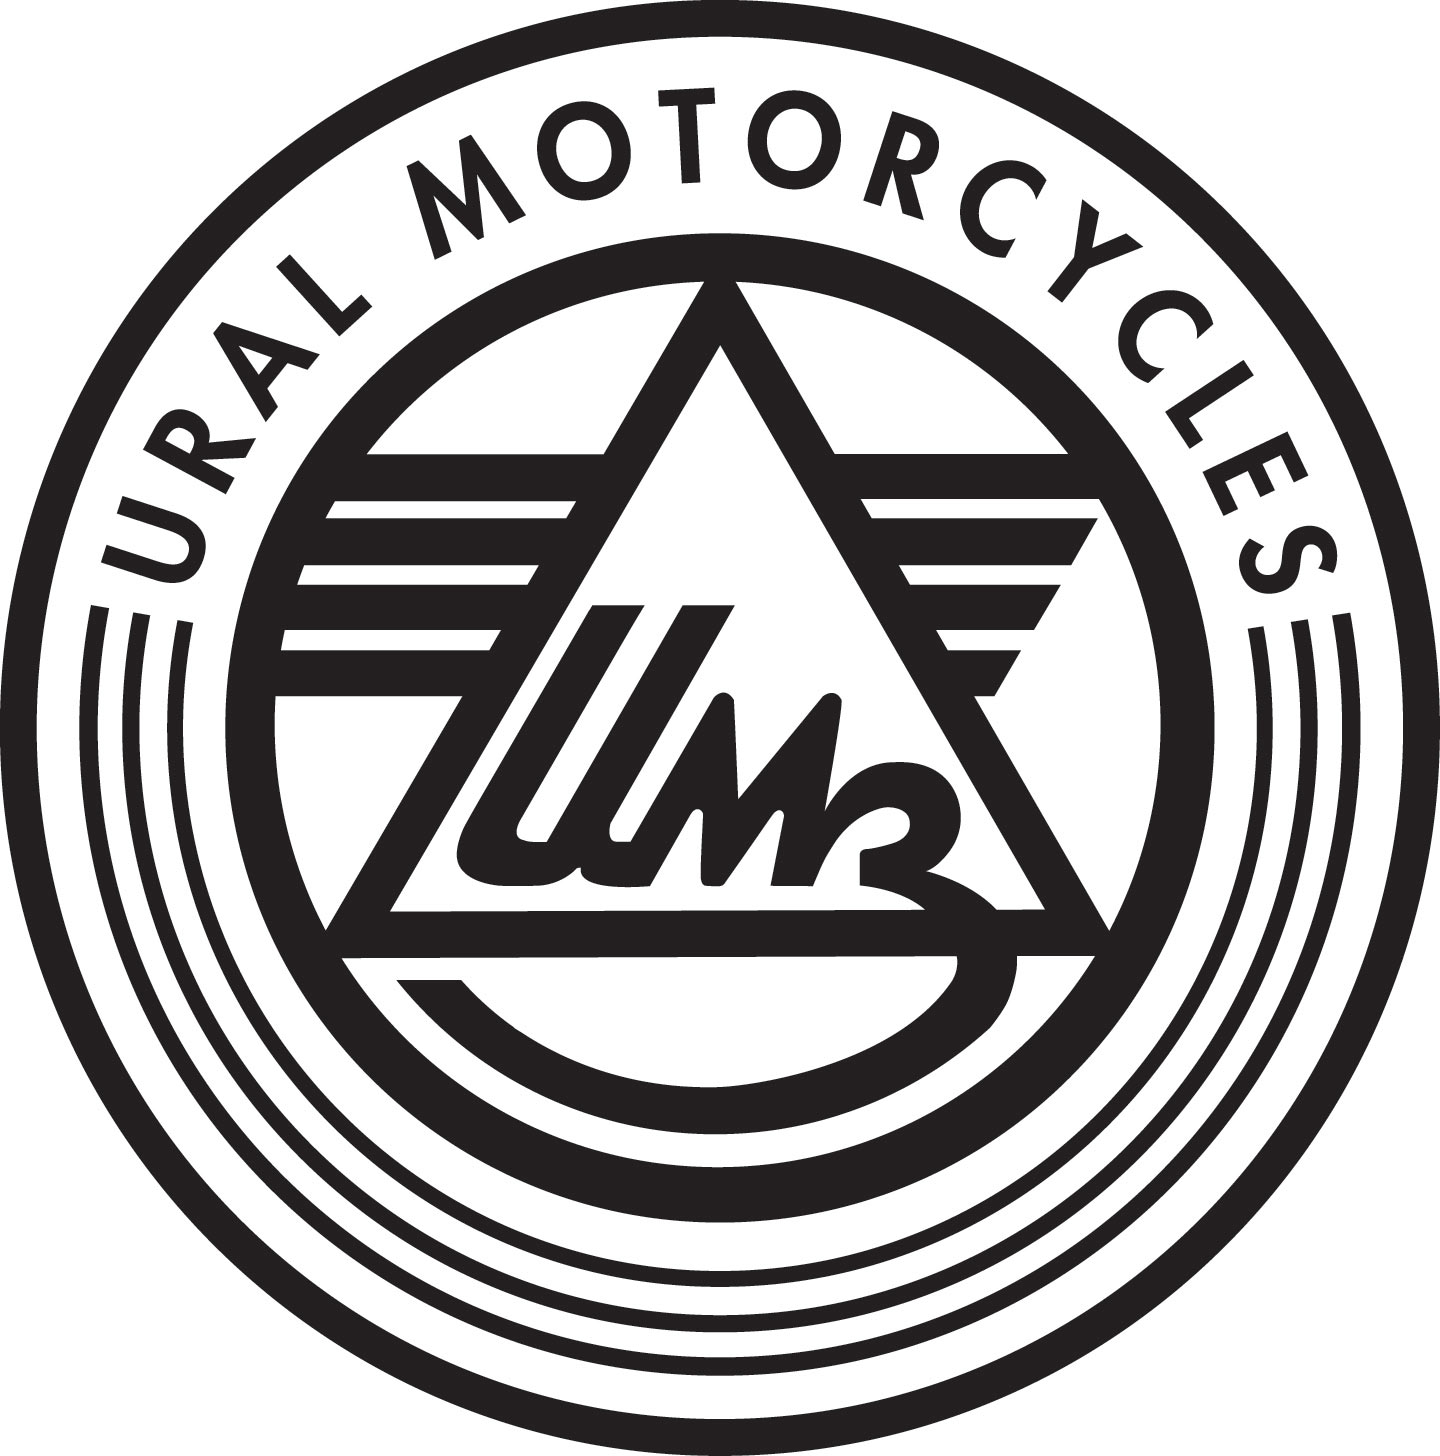 Ural motorrad - Unsere Produkte unter allen Ural motorrad